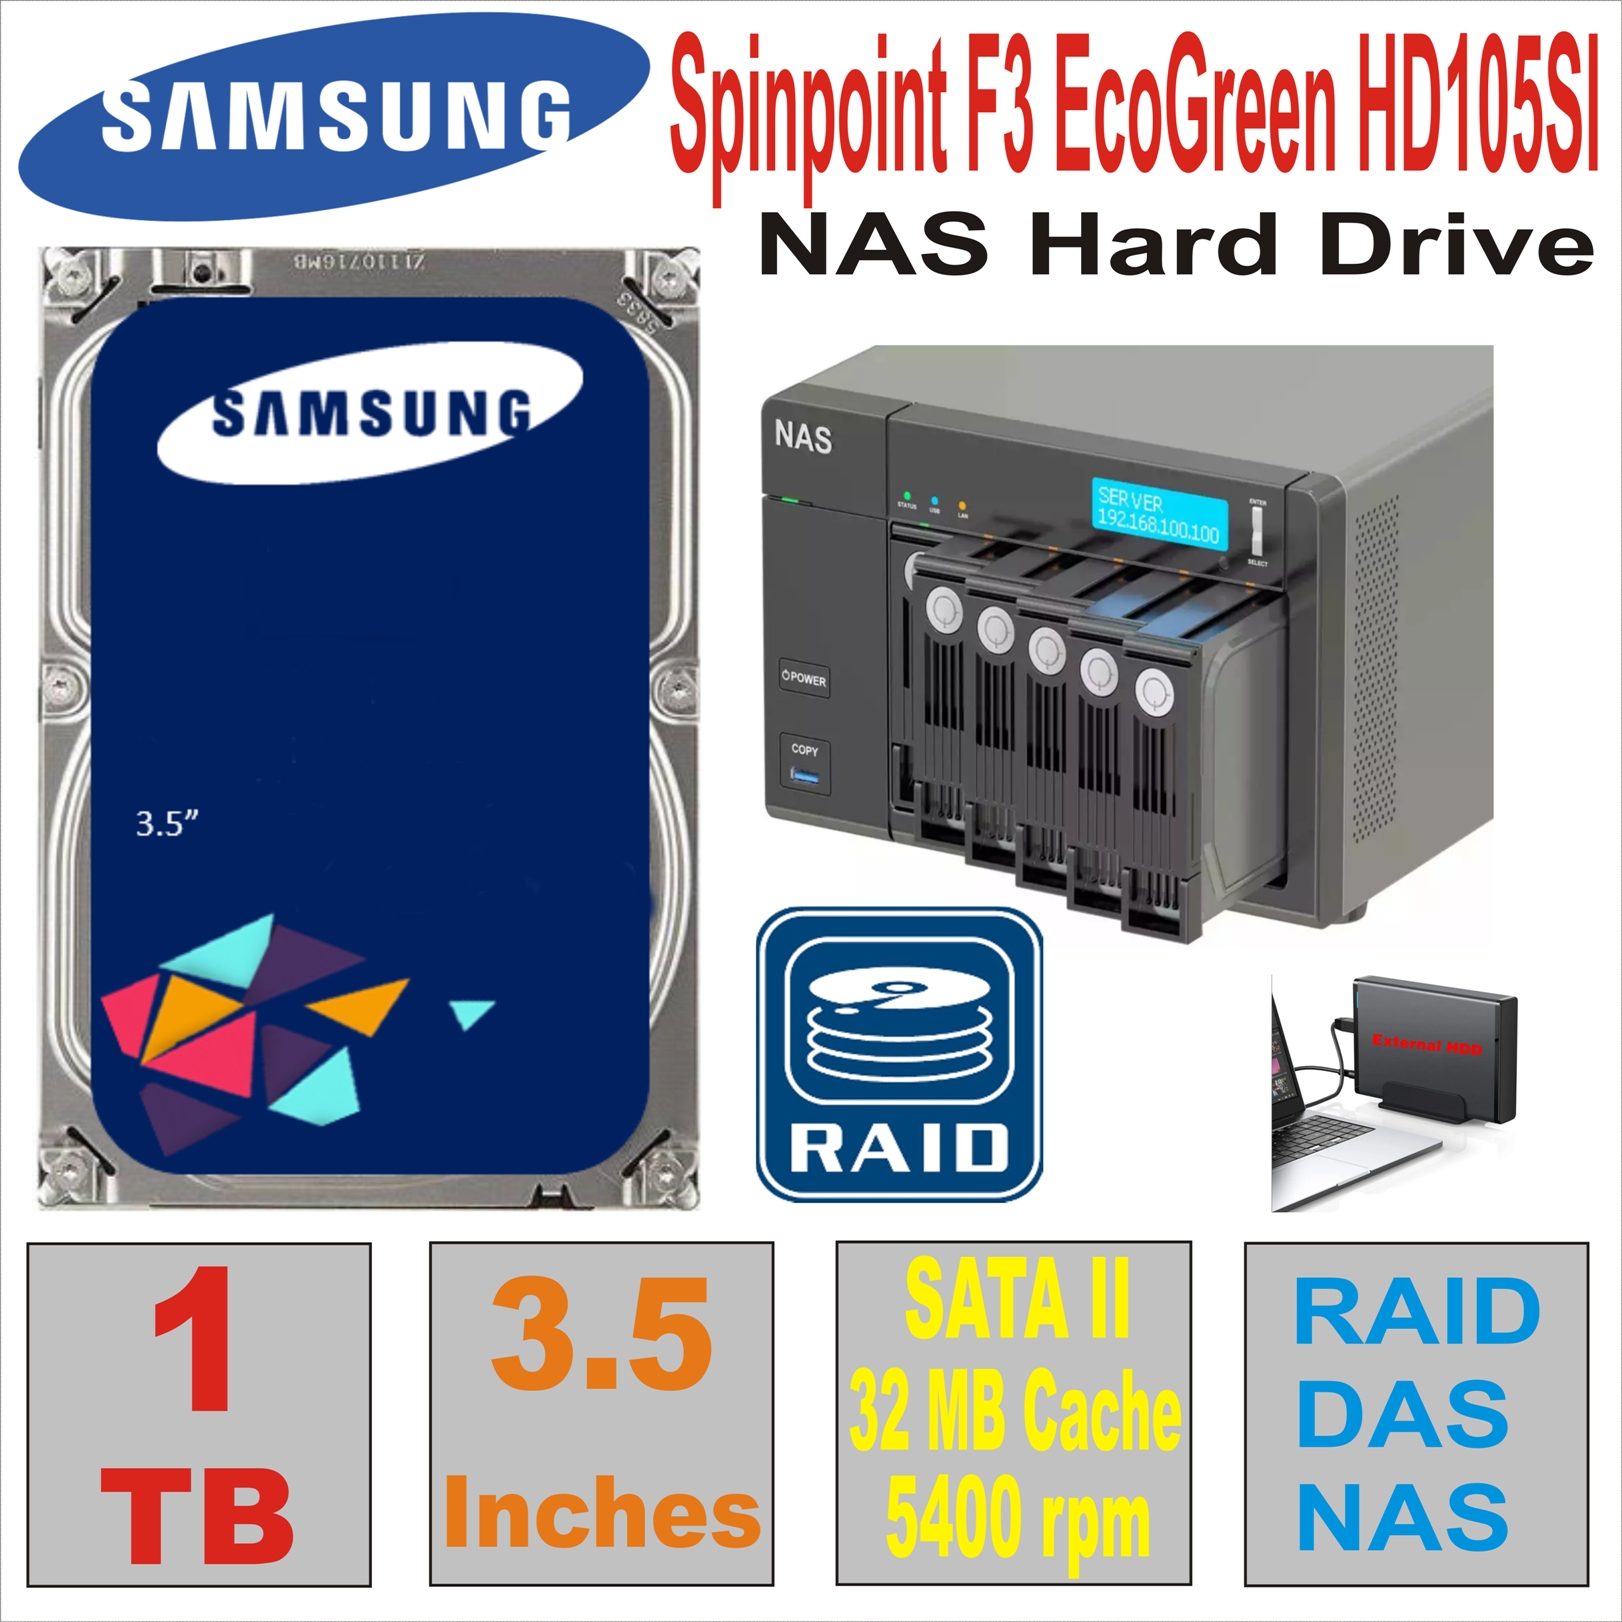 HDD 3.5` 1 TB SAMSUNG EcoGreen HD105SI